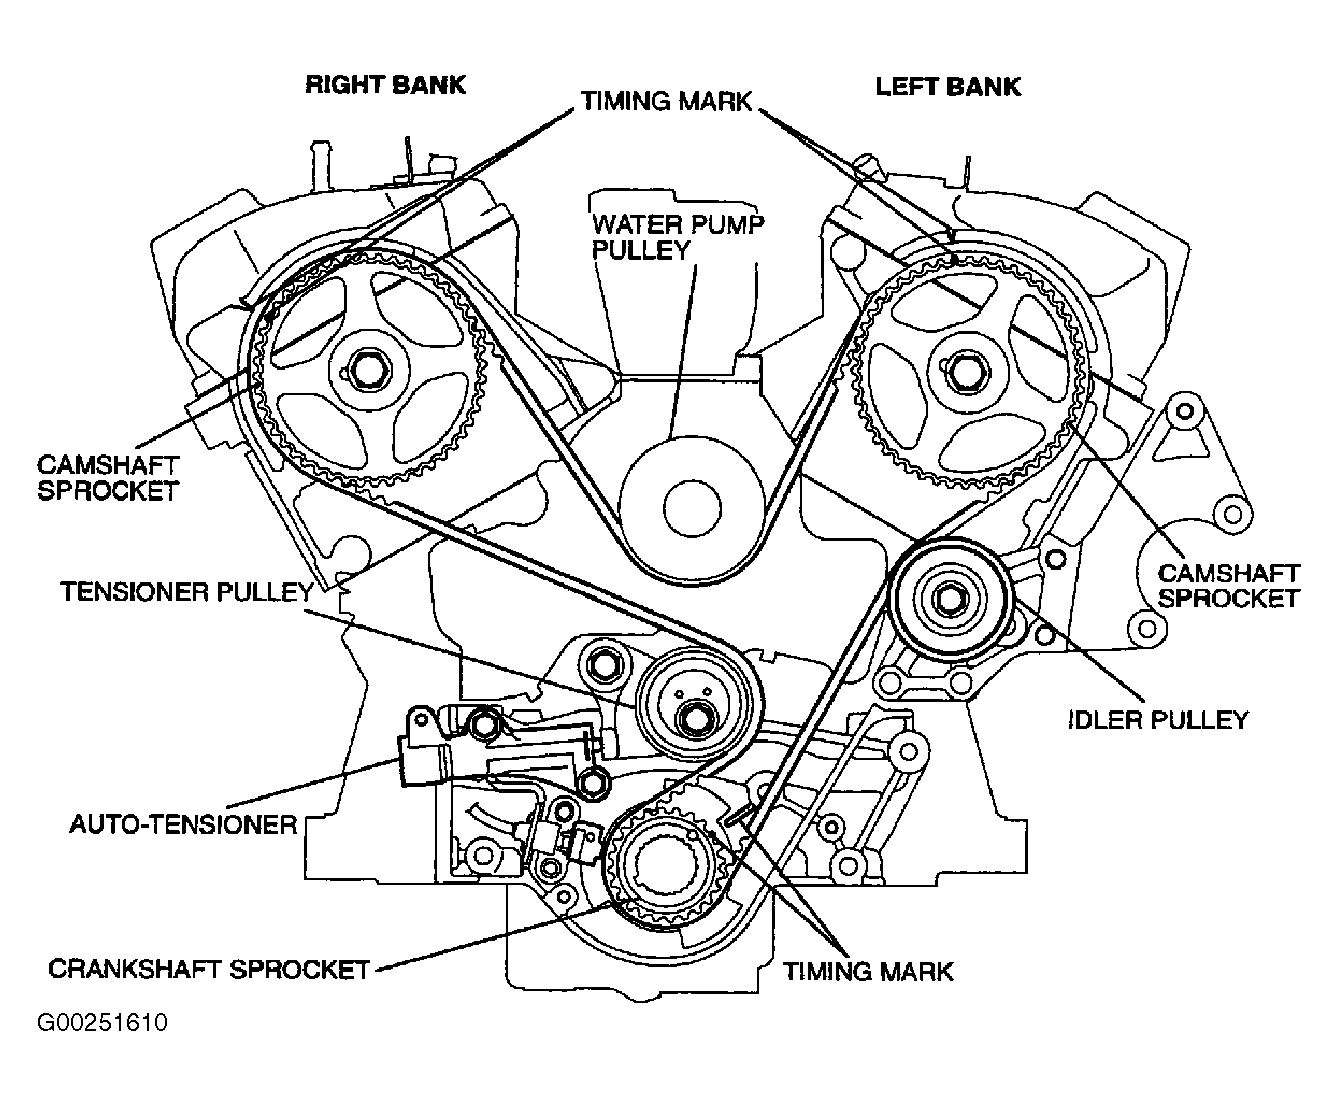 2002 Mitsubishi Montero Serpentine Belt Routing and Timing Belt Diagrams